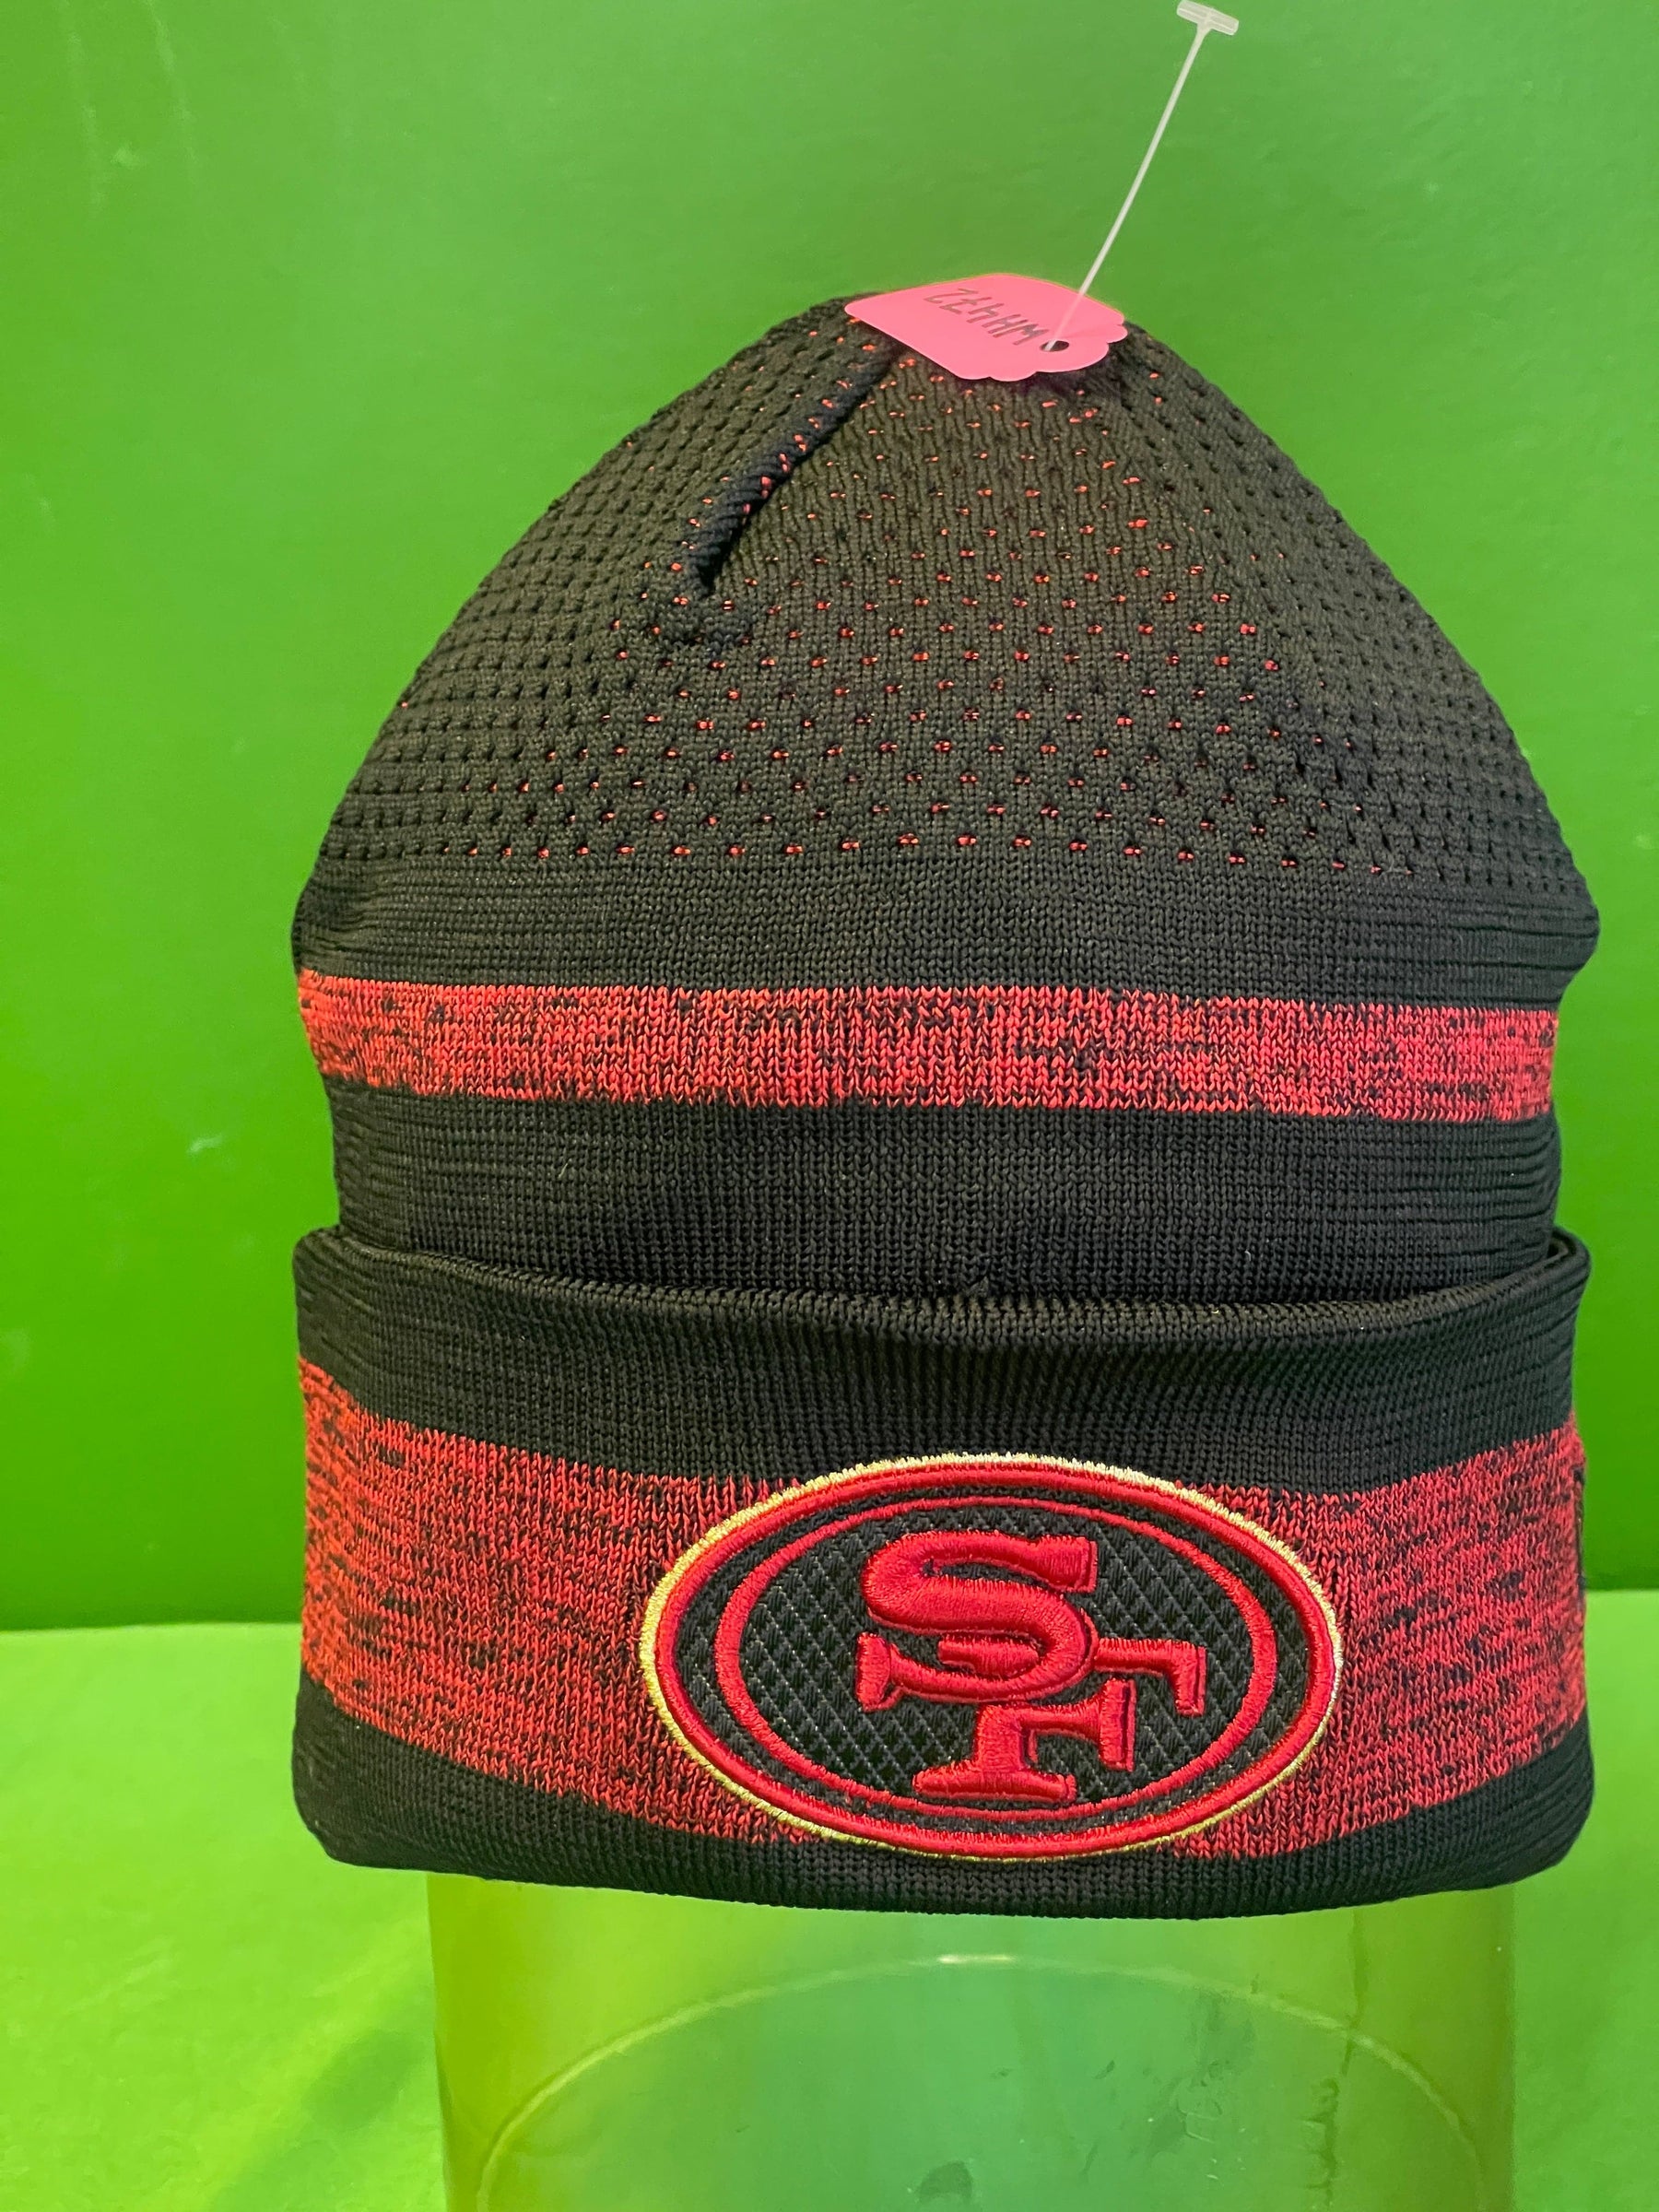 NFL San Francisco 49ers New Era Black & Red Woolly Hat Beanie OSFM